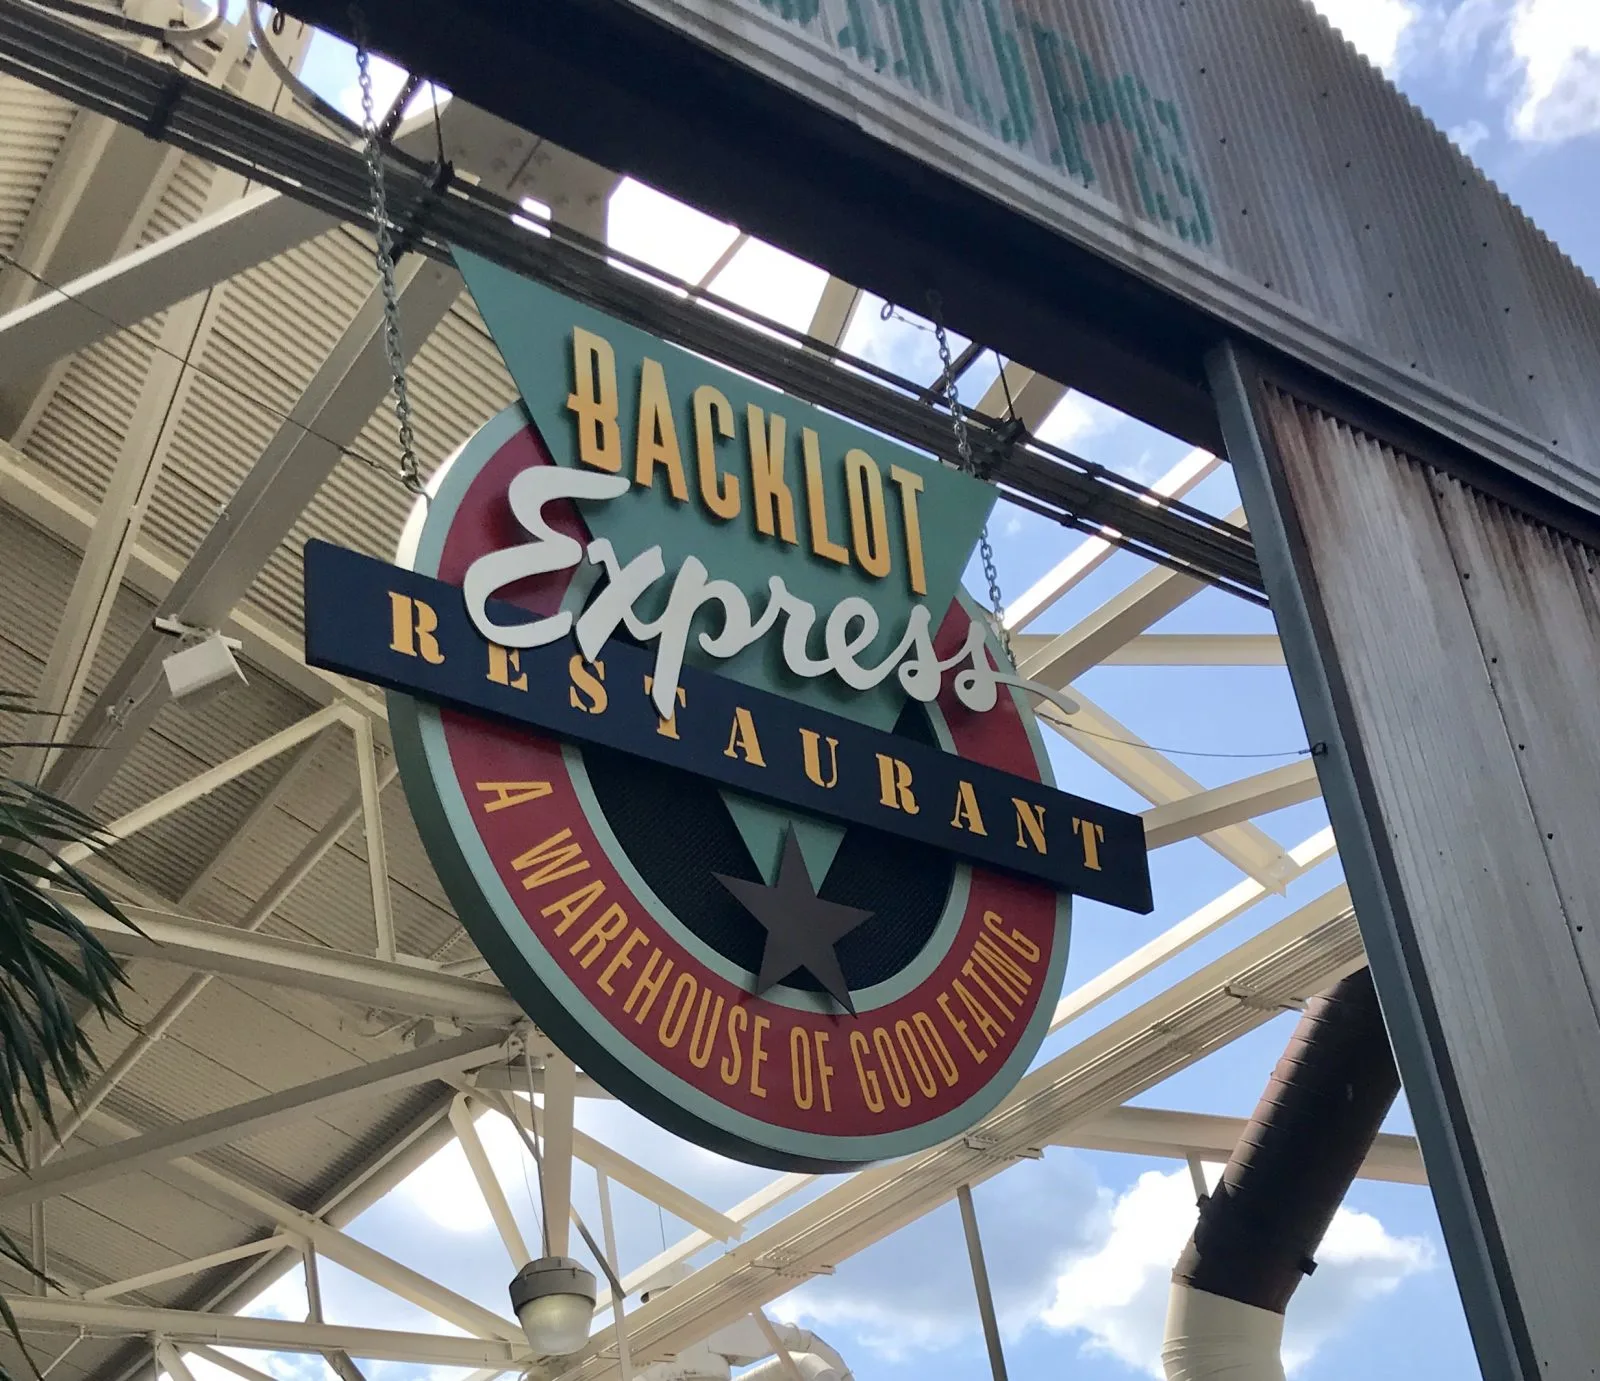 Backlot Express Restaurant sign